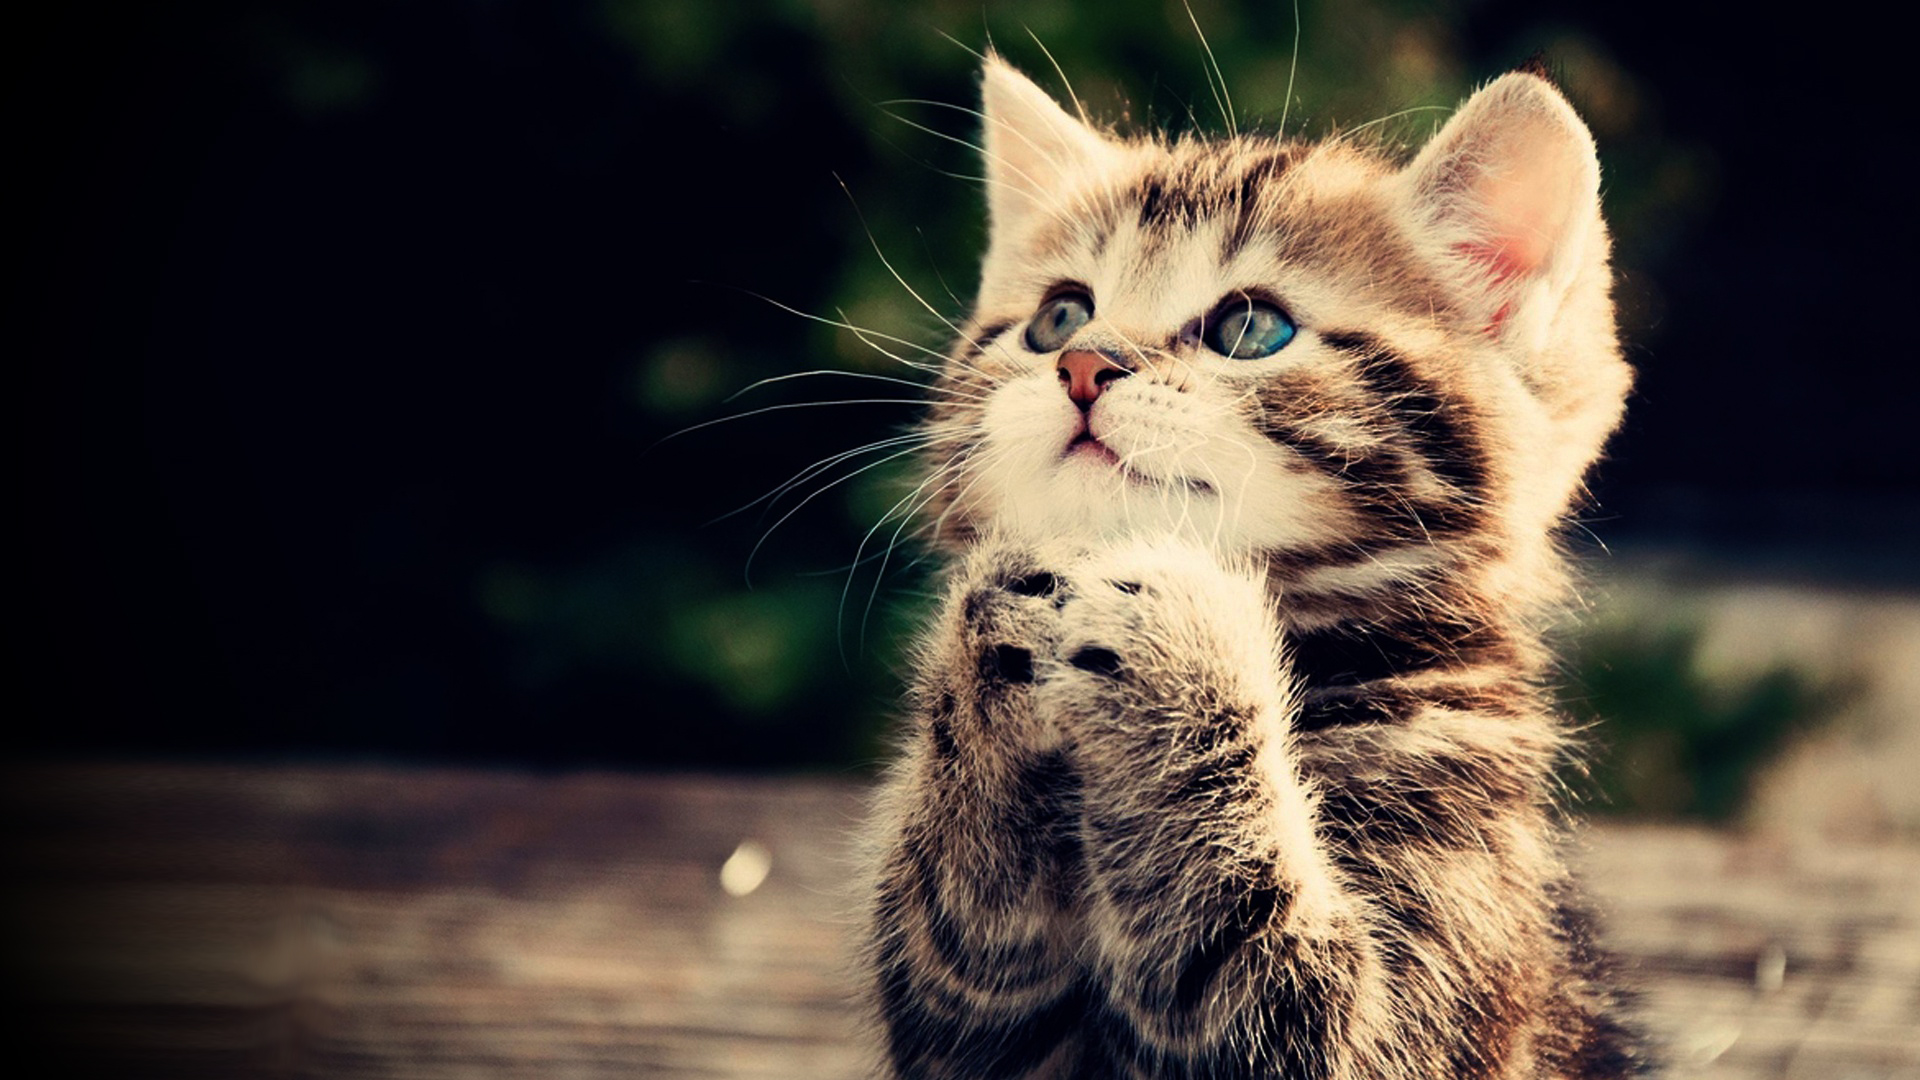 Free download funny cat full hd wallpaper praying kitten cute ...